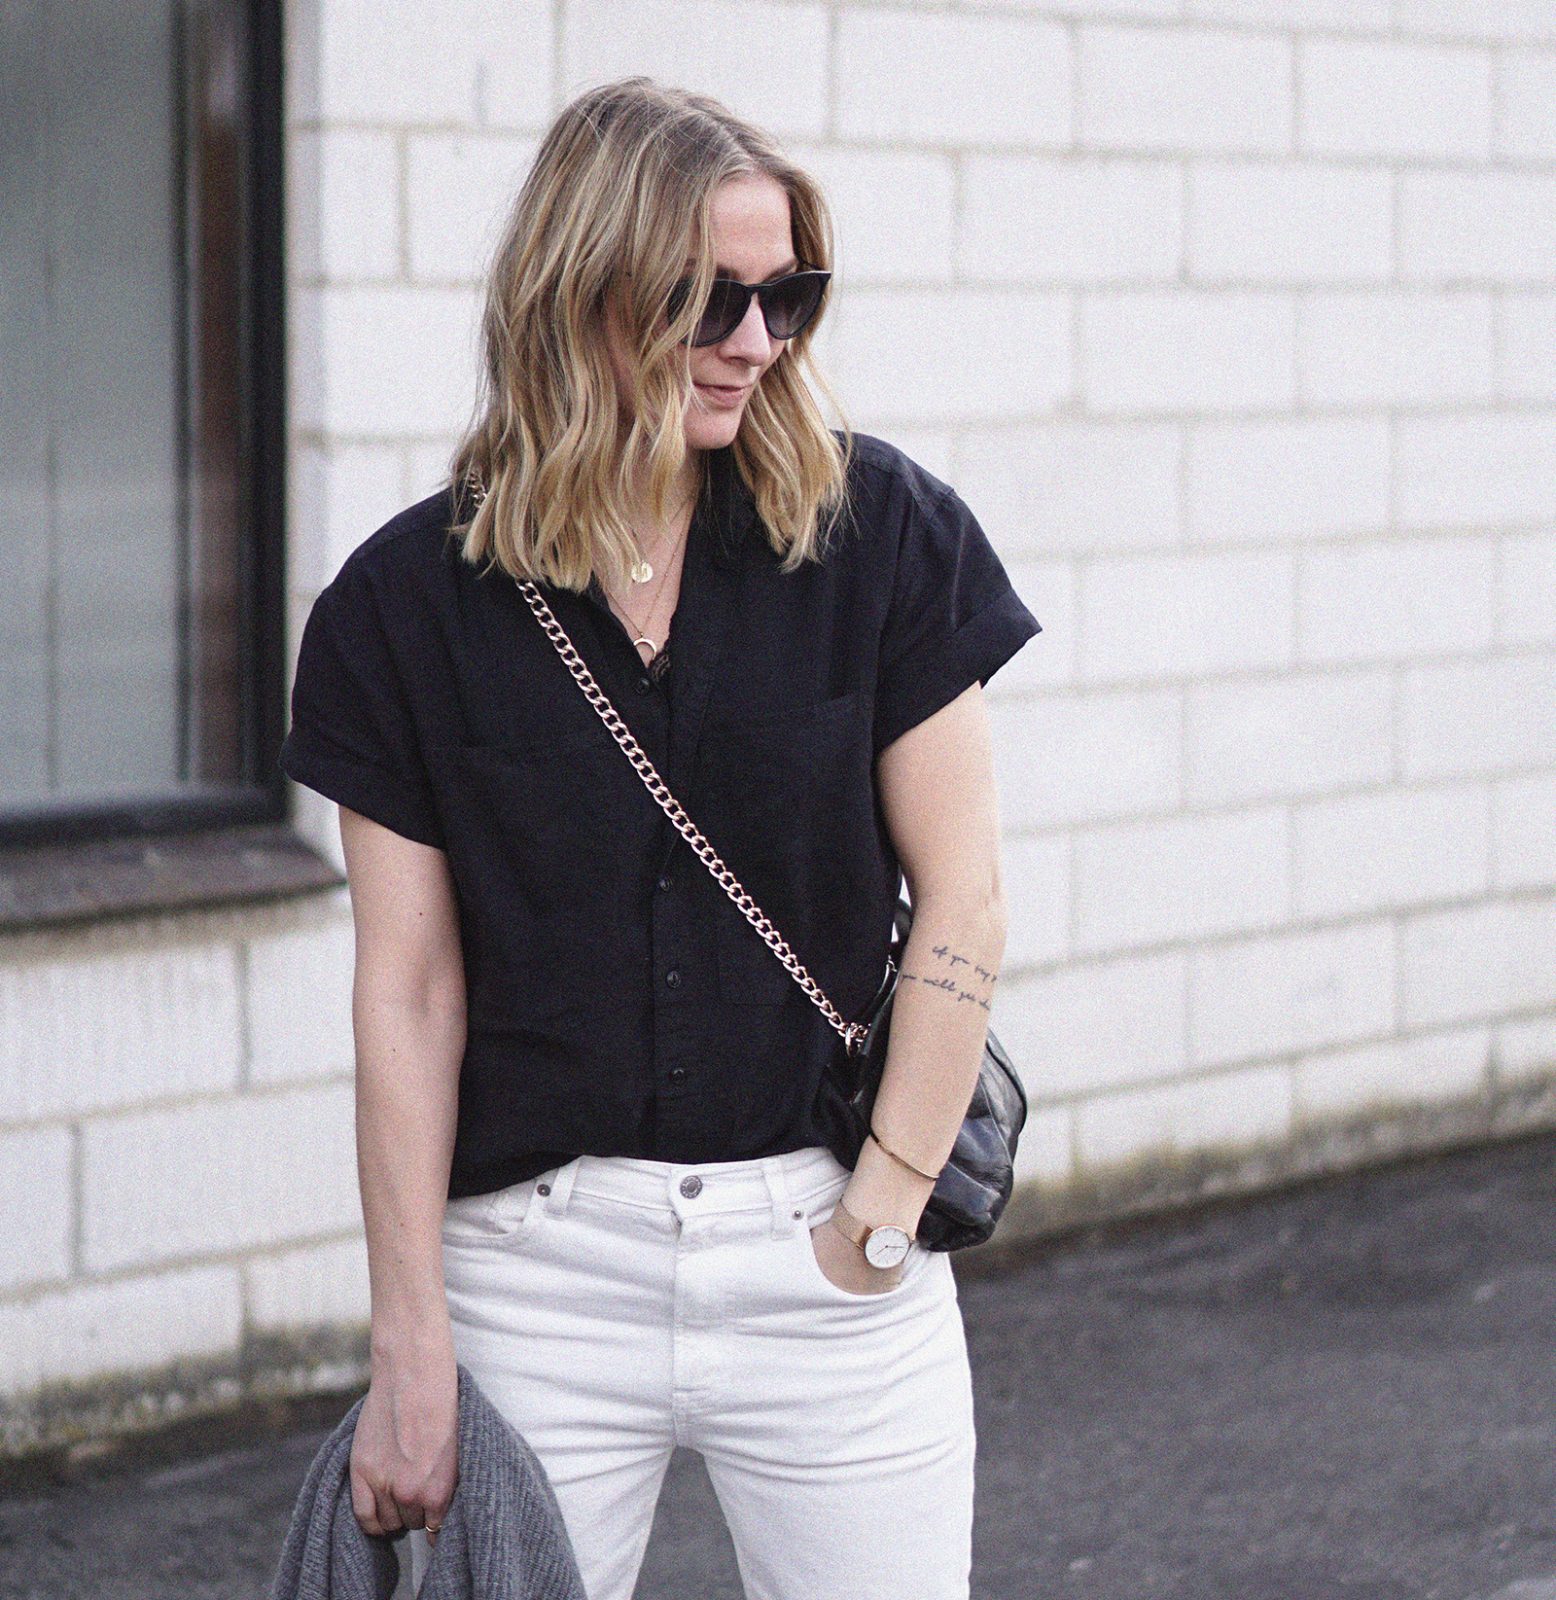 6 ways to wear: the short sleeve shirt.